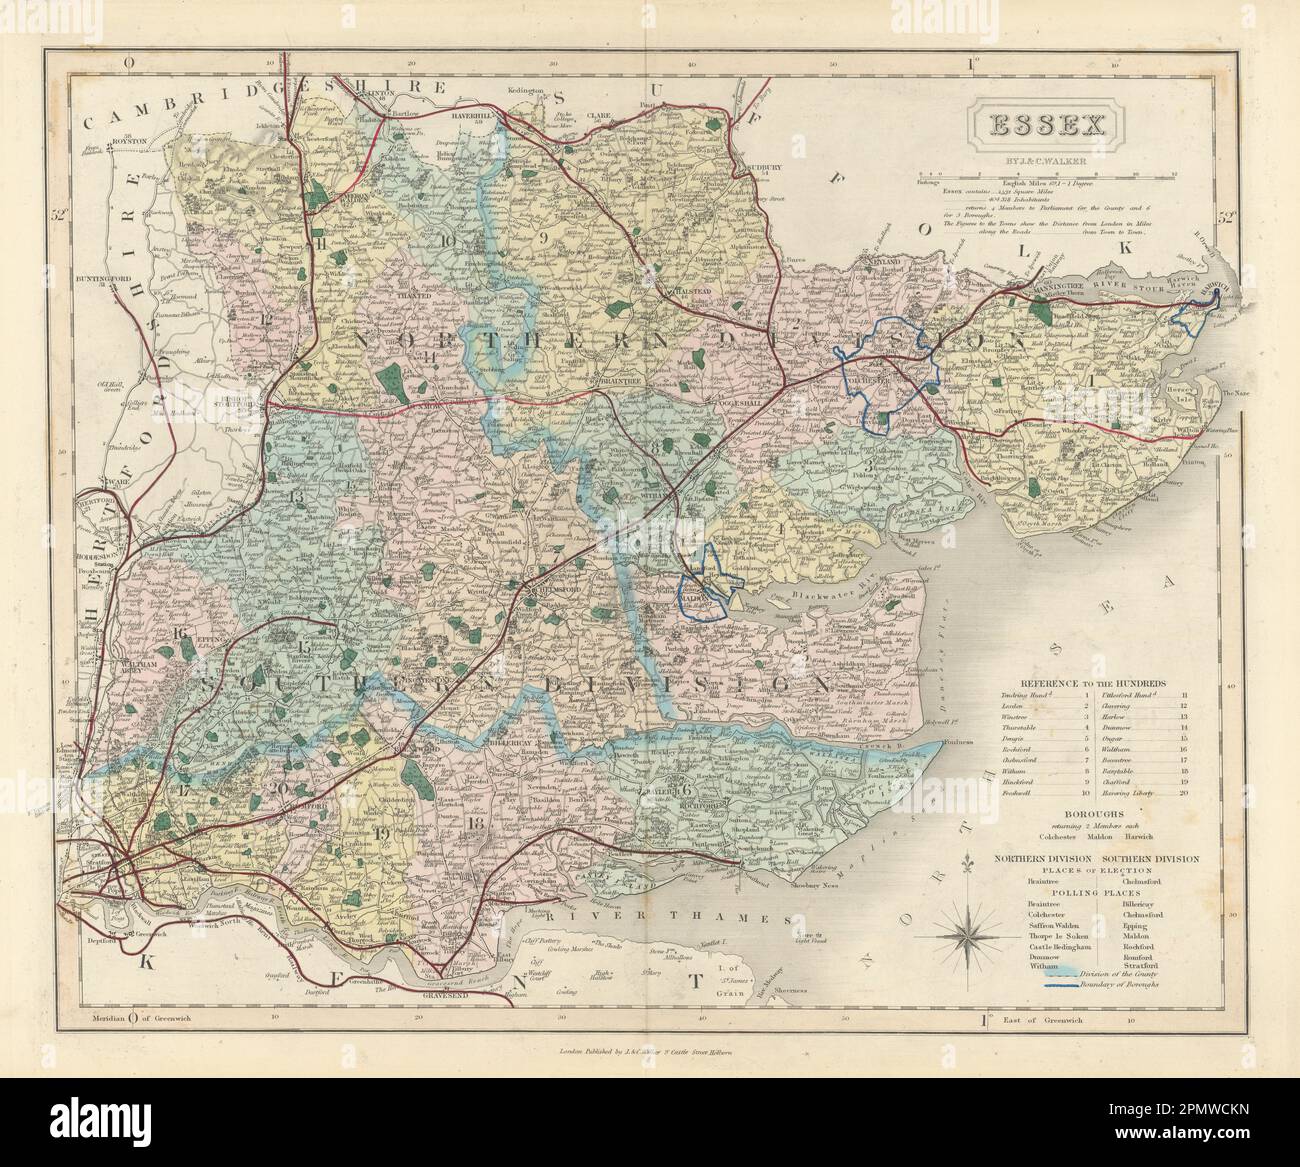 Essex antica contea mappa di J & C Walker. Ferrovie e quartieri 1870 anni Foto Stock